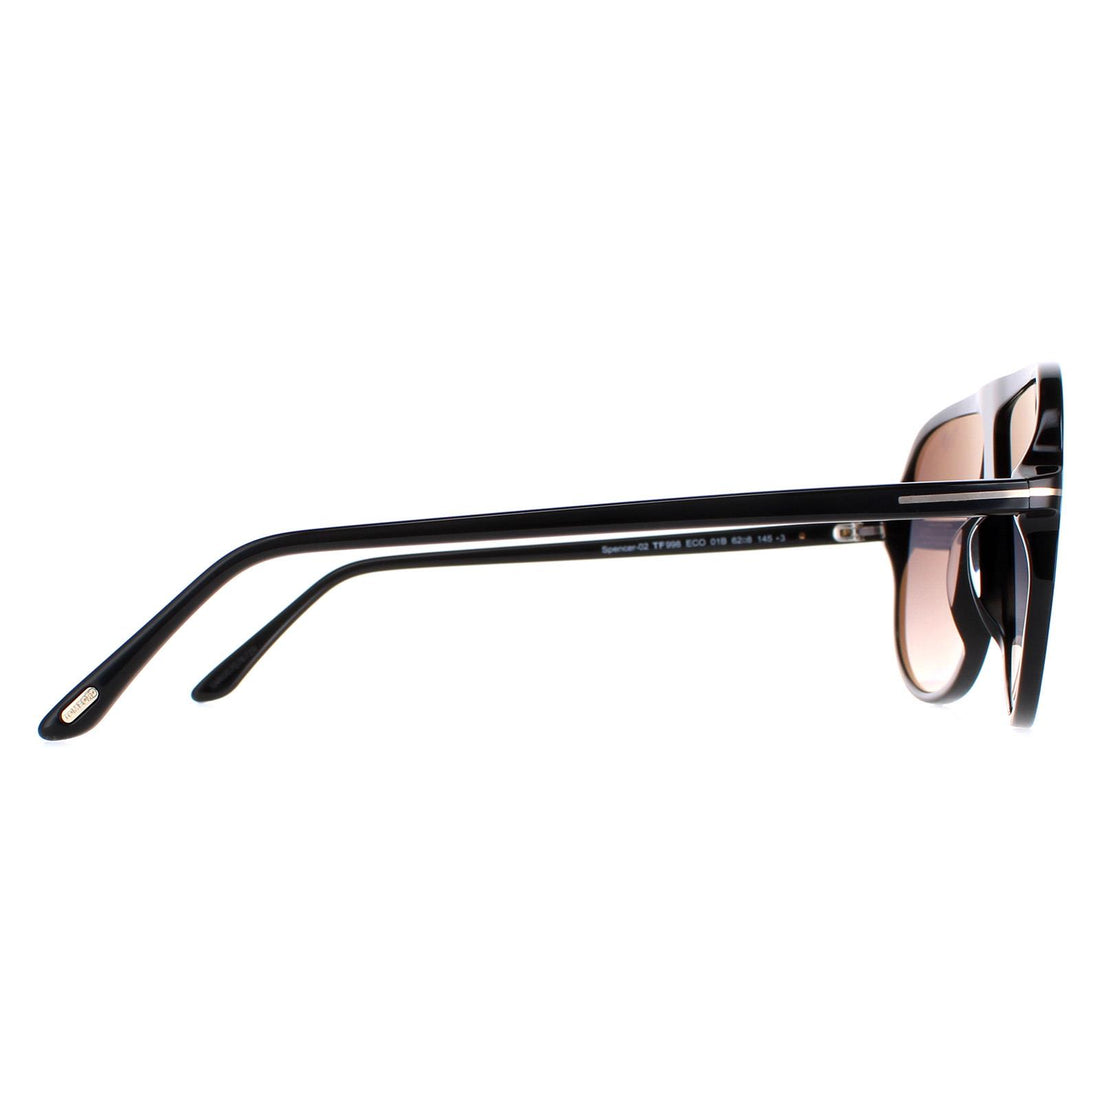 Tom Ford Sunglasses Spencer 02 FT0998 01B Shiny Black Smoke Gradient